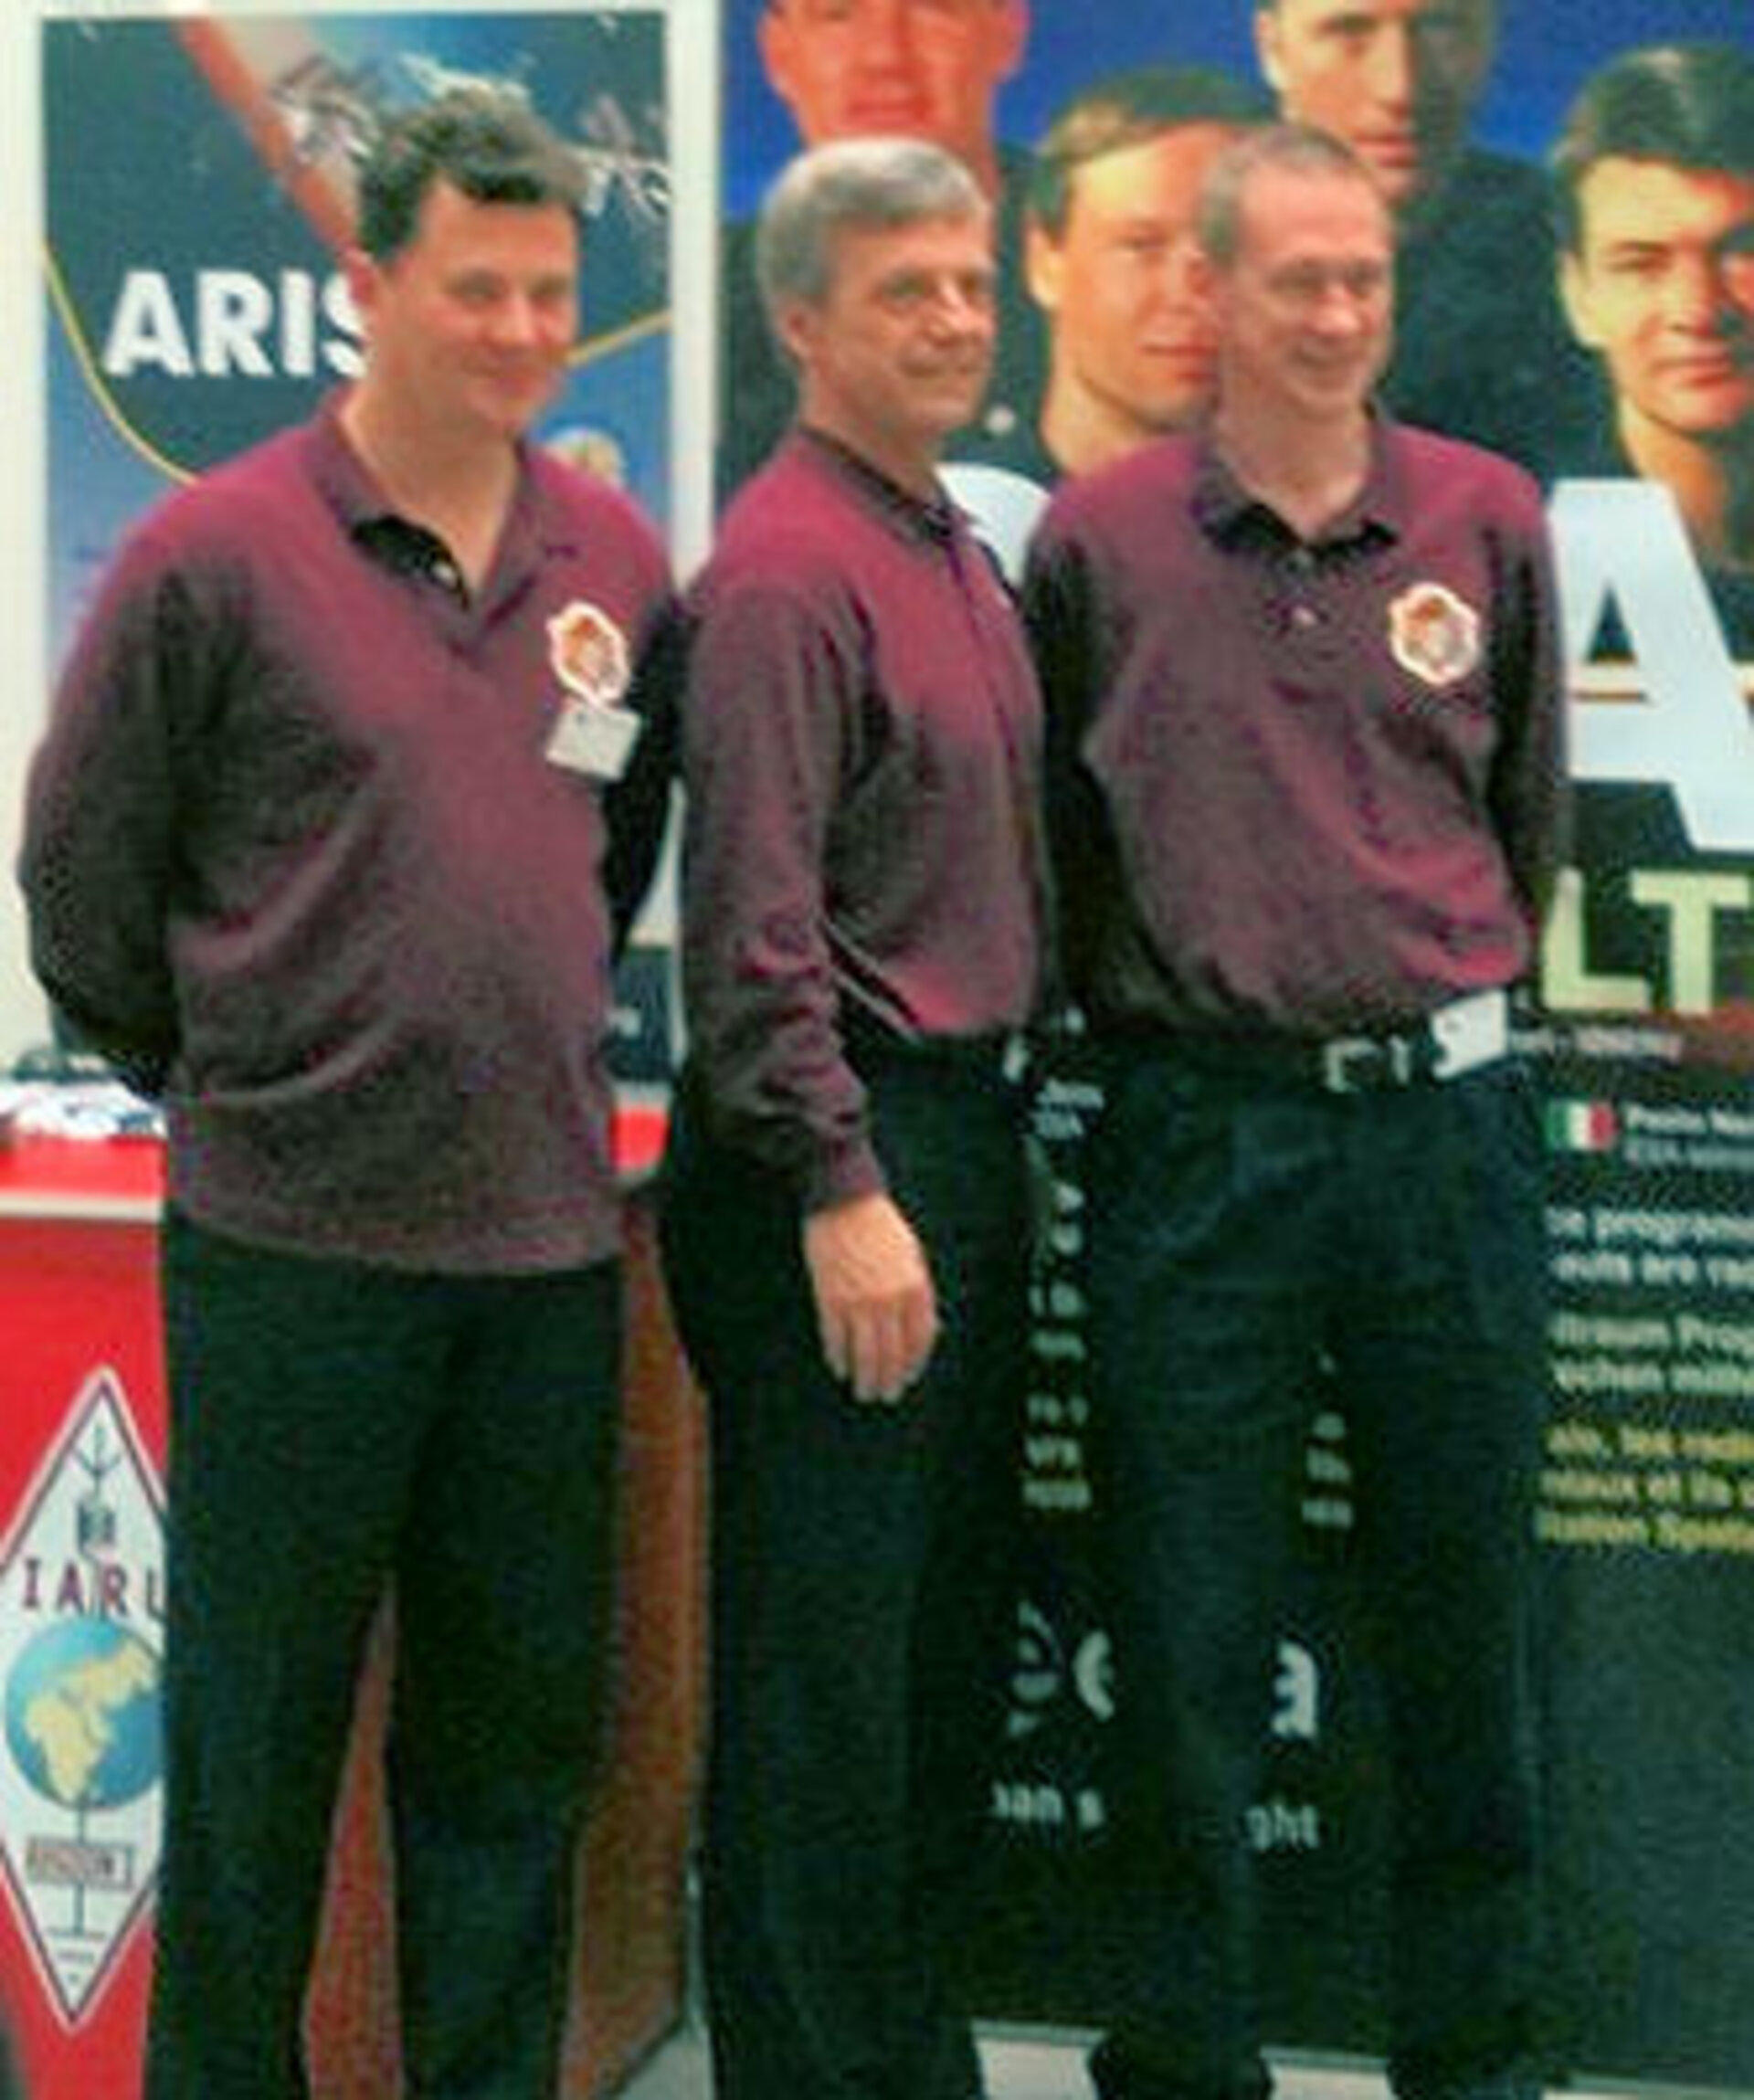 Astronauts De Winne, Thirsk and Romanenko visiting the exhibition